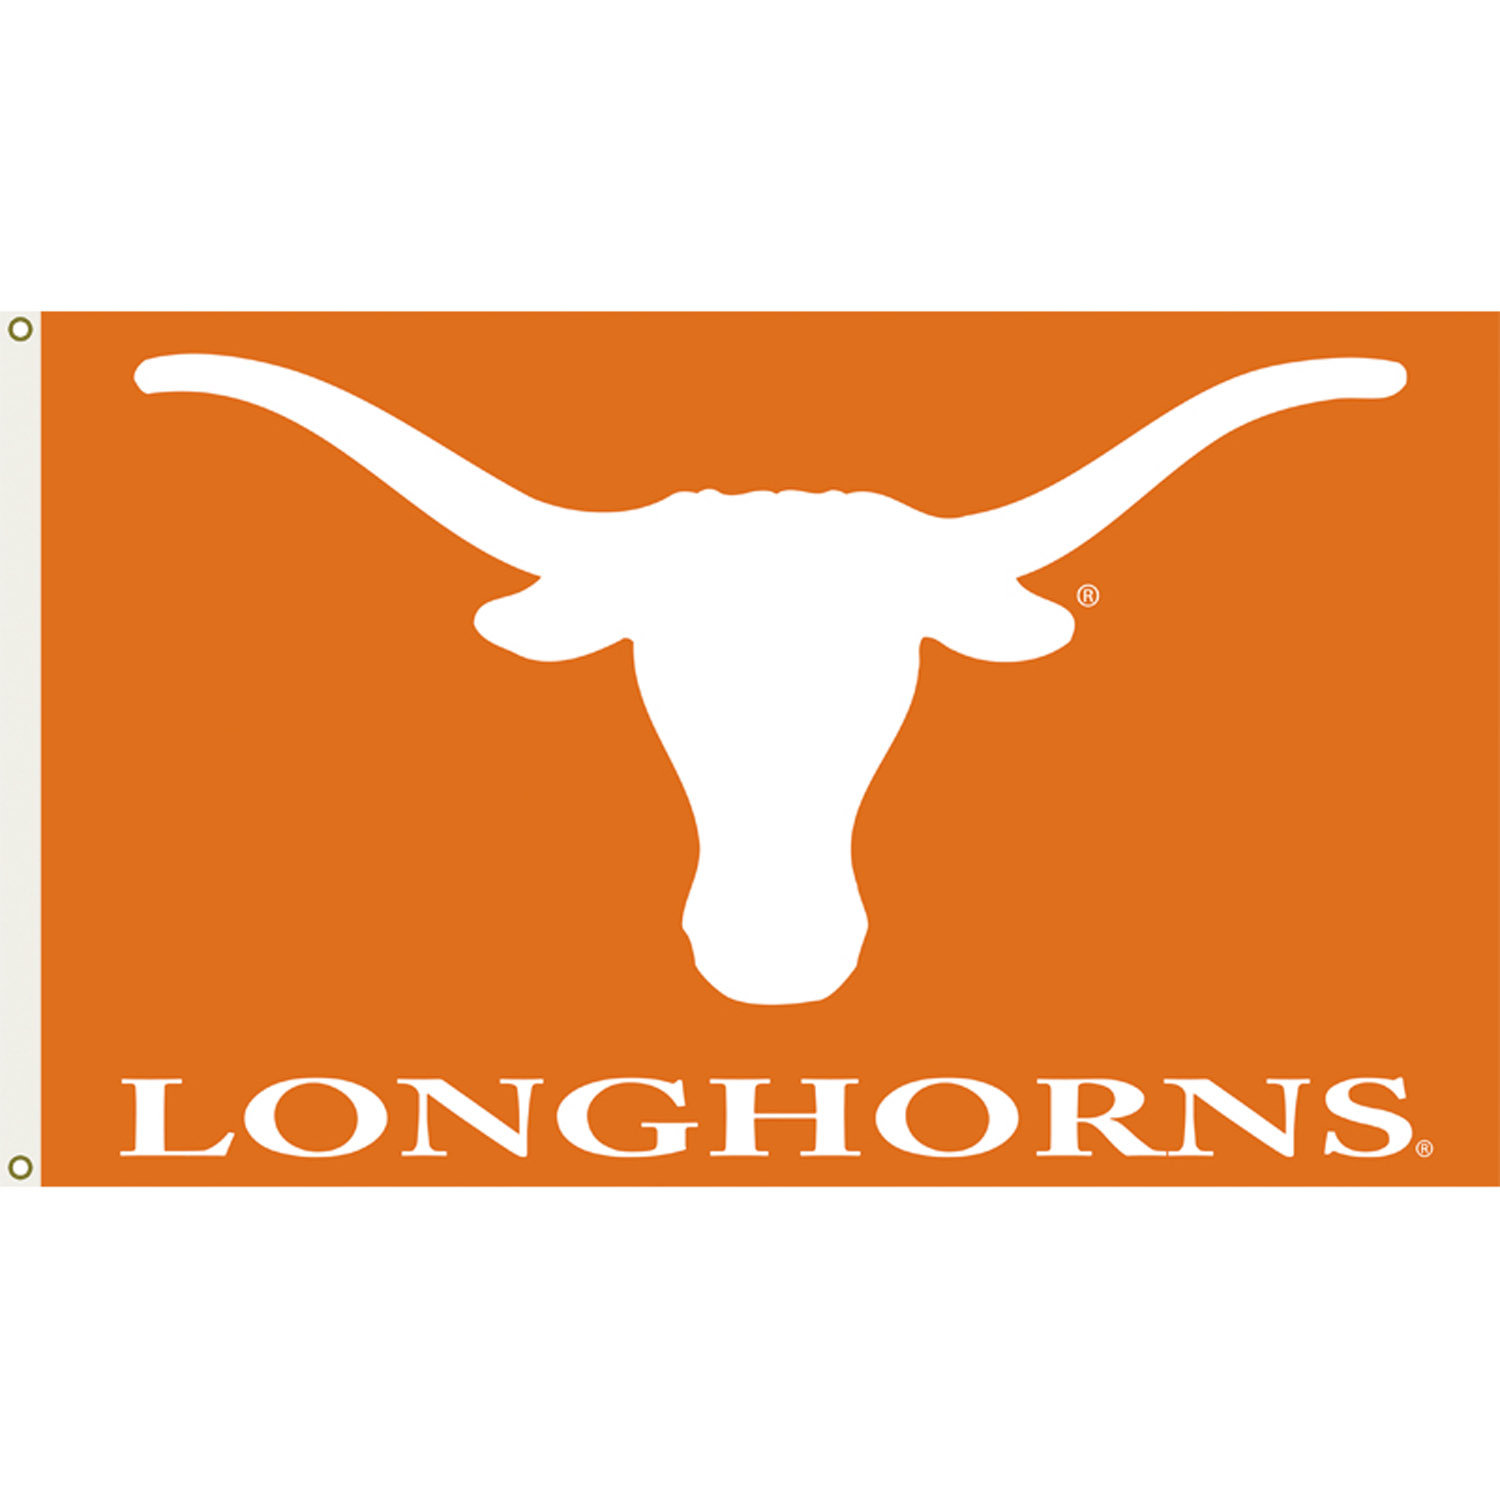 longhorn clipart logo - photo #17